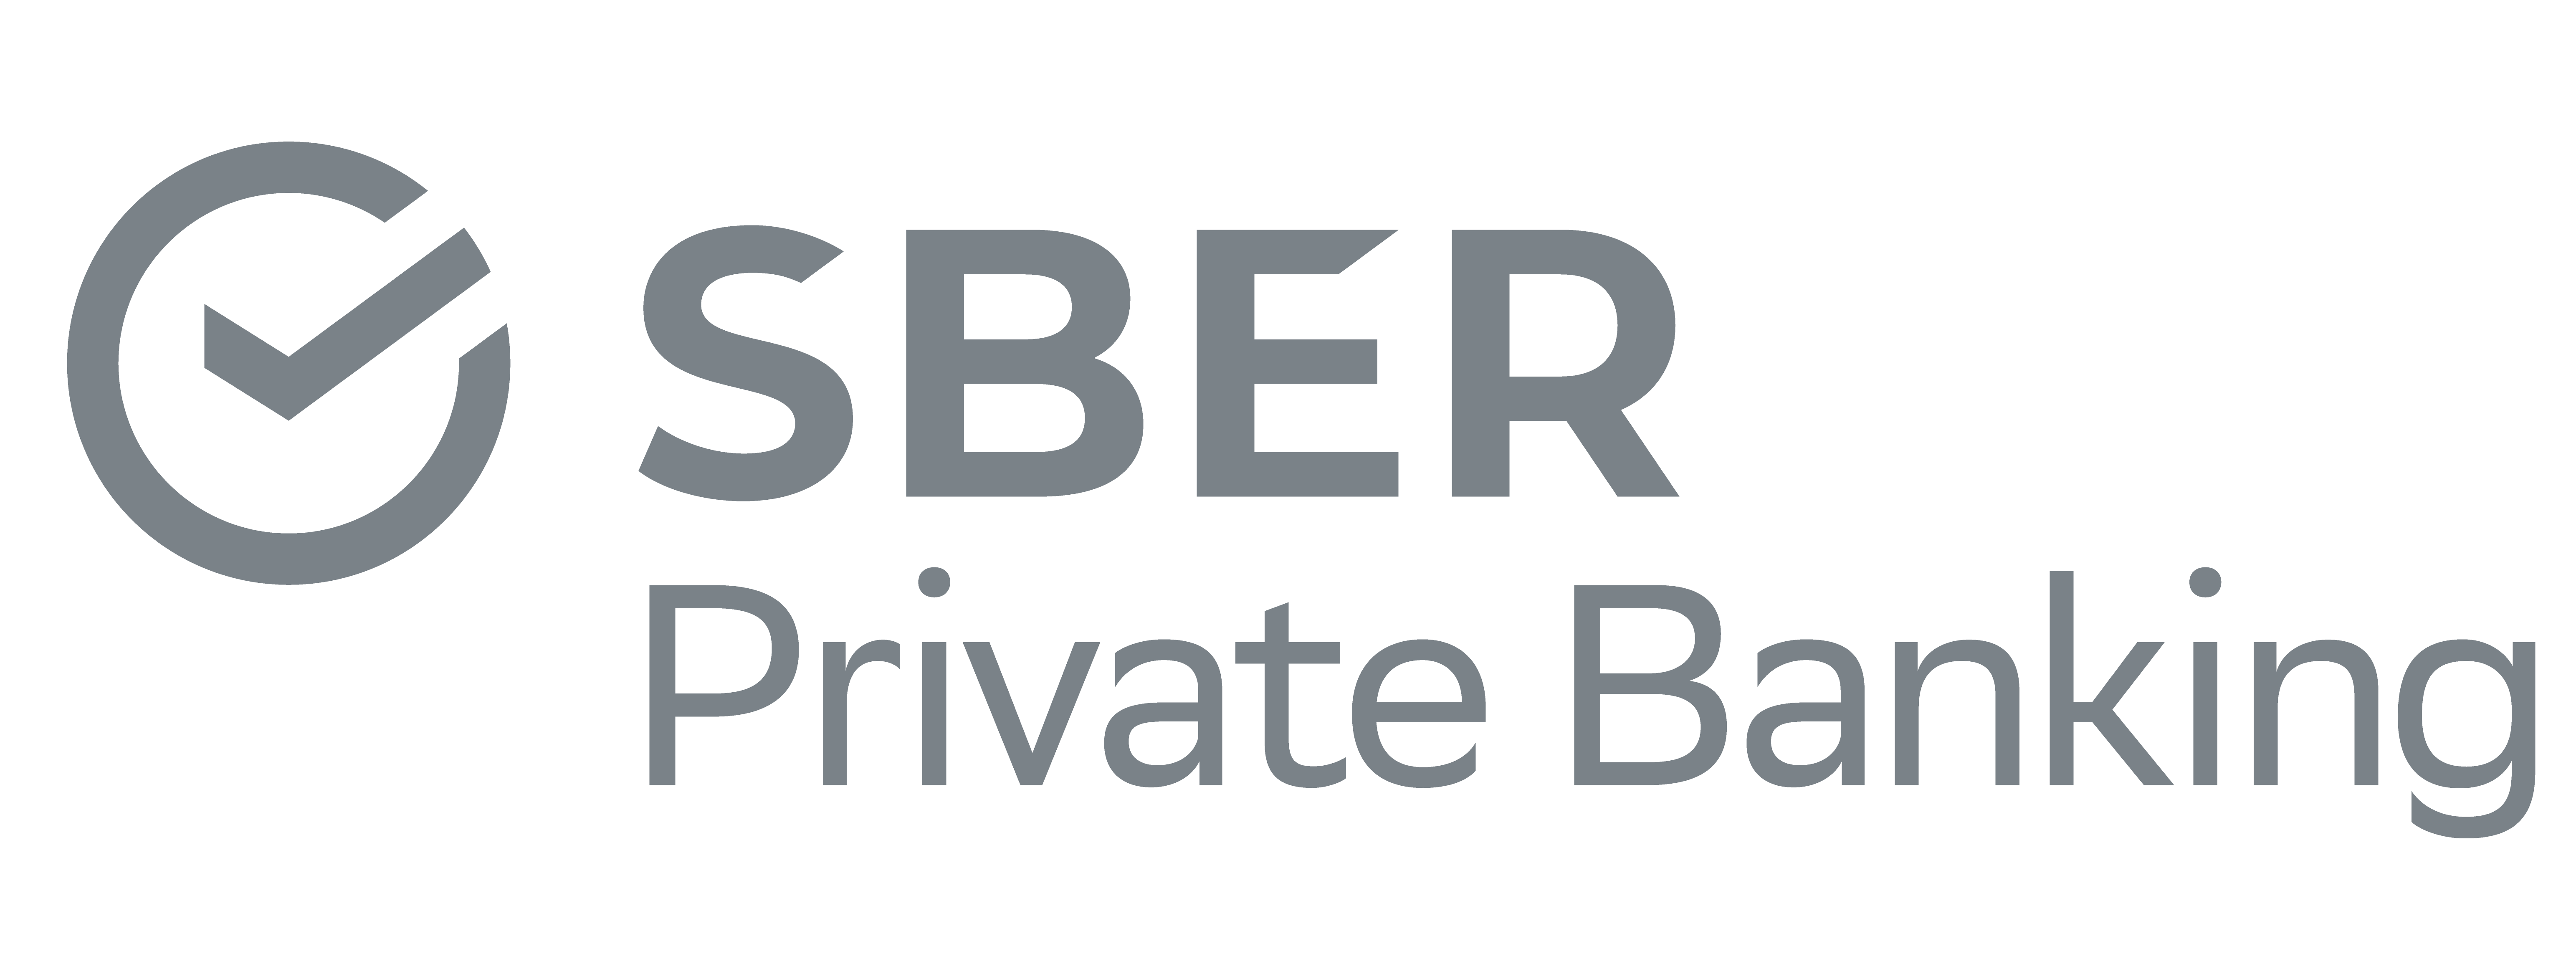 Private ebooker life. Сбер private. Сбербанк private Banking. Sber private Banking логотип. Сбербанк приват банкинг.